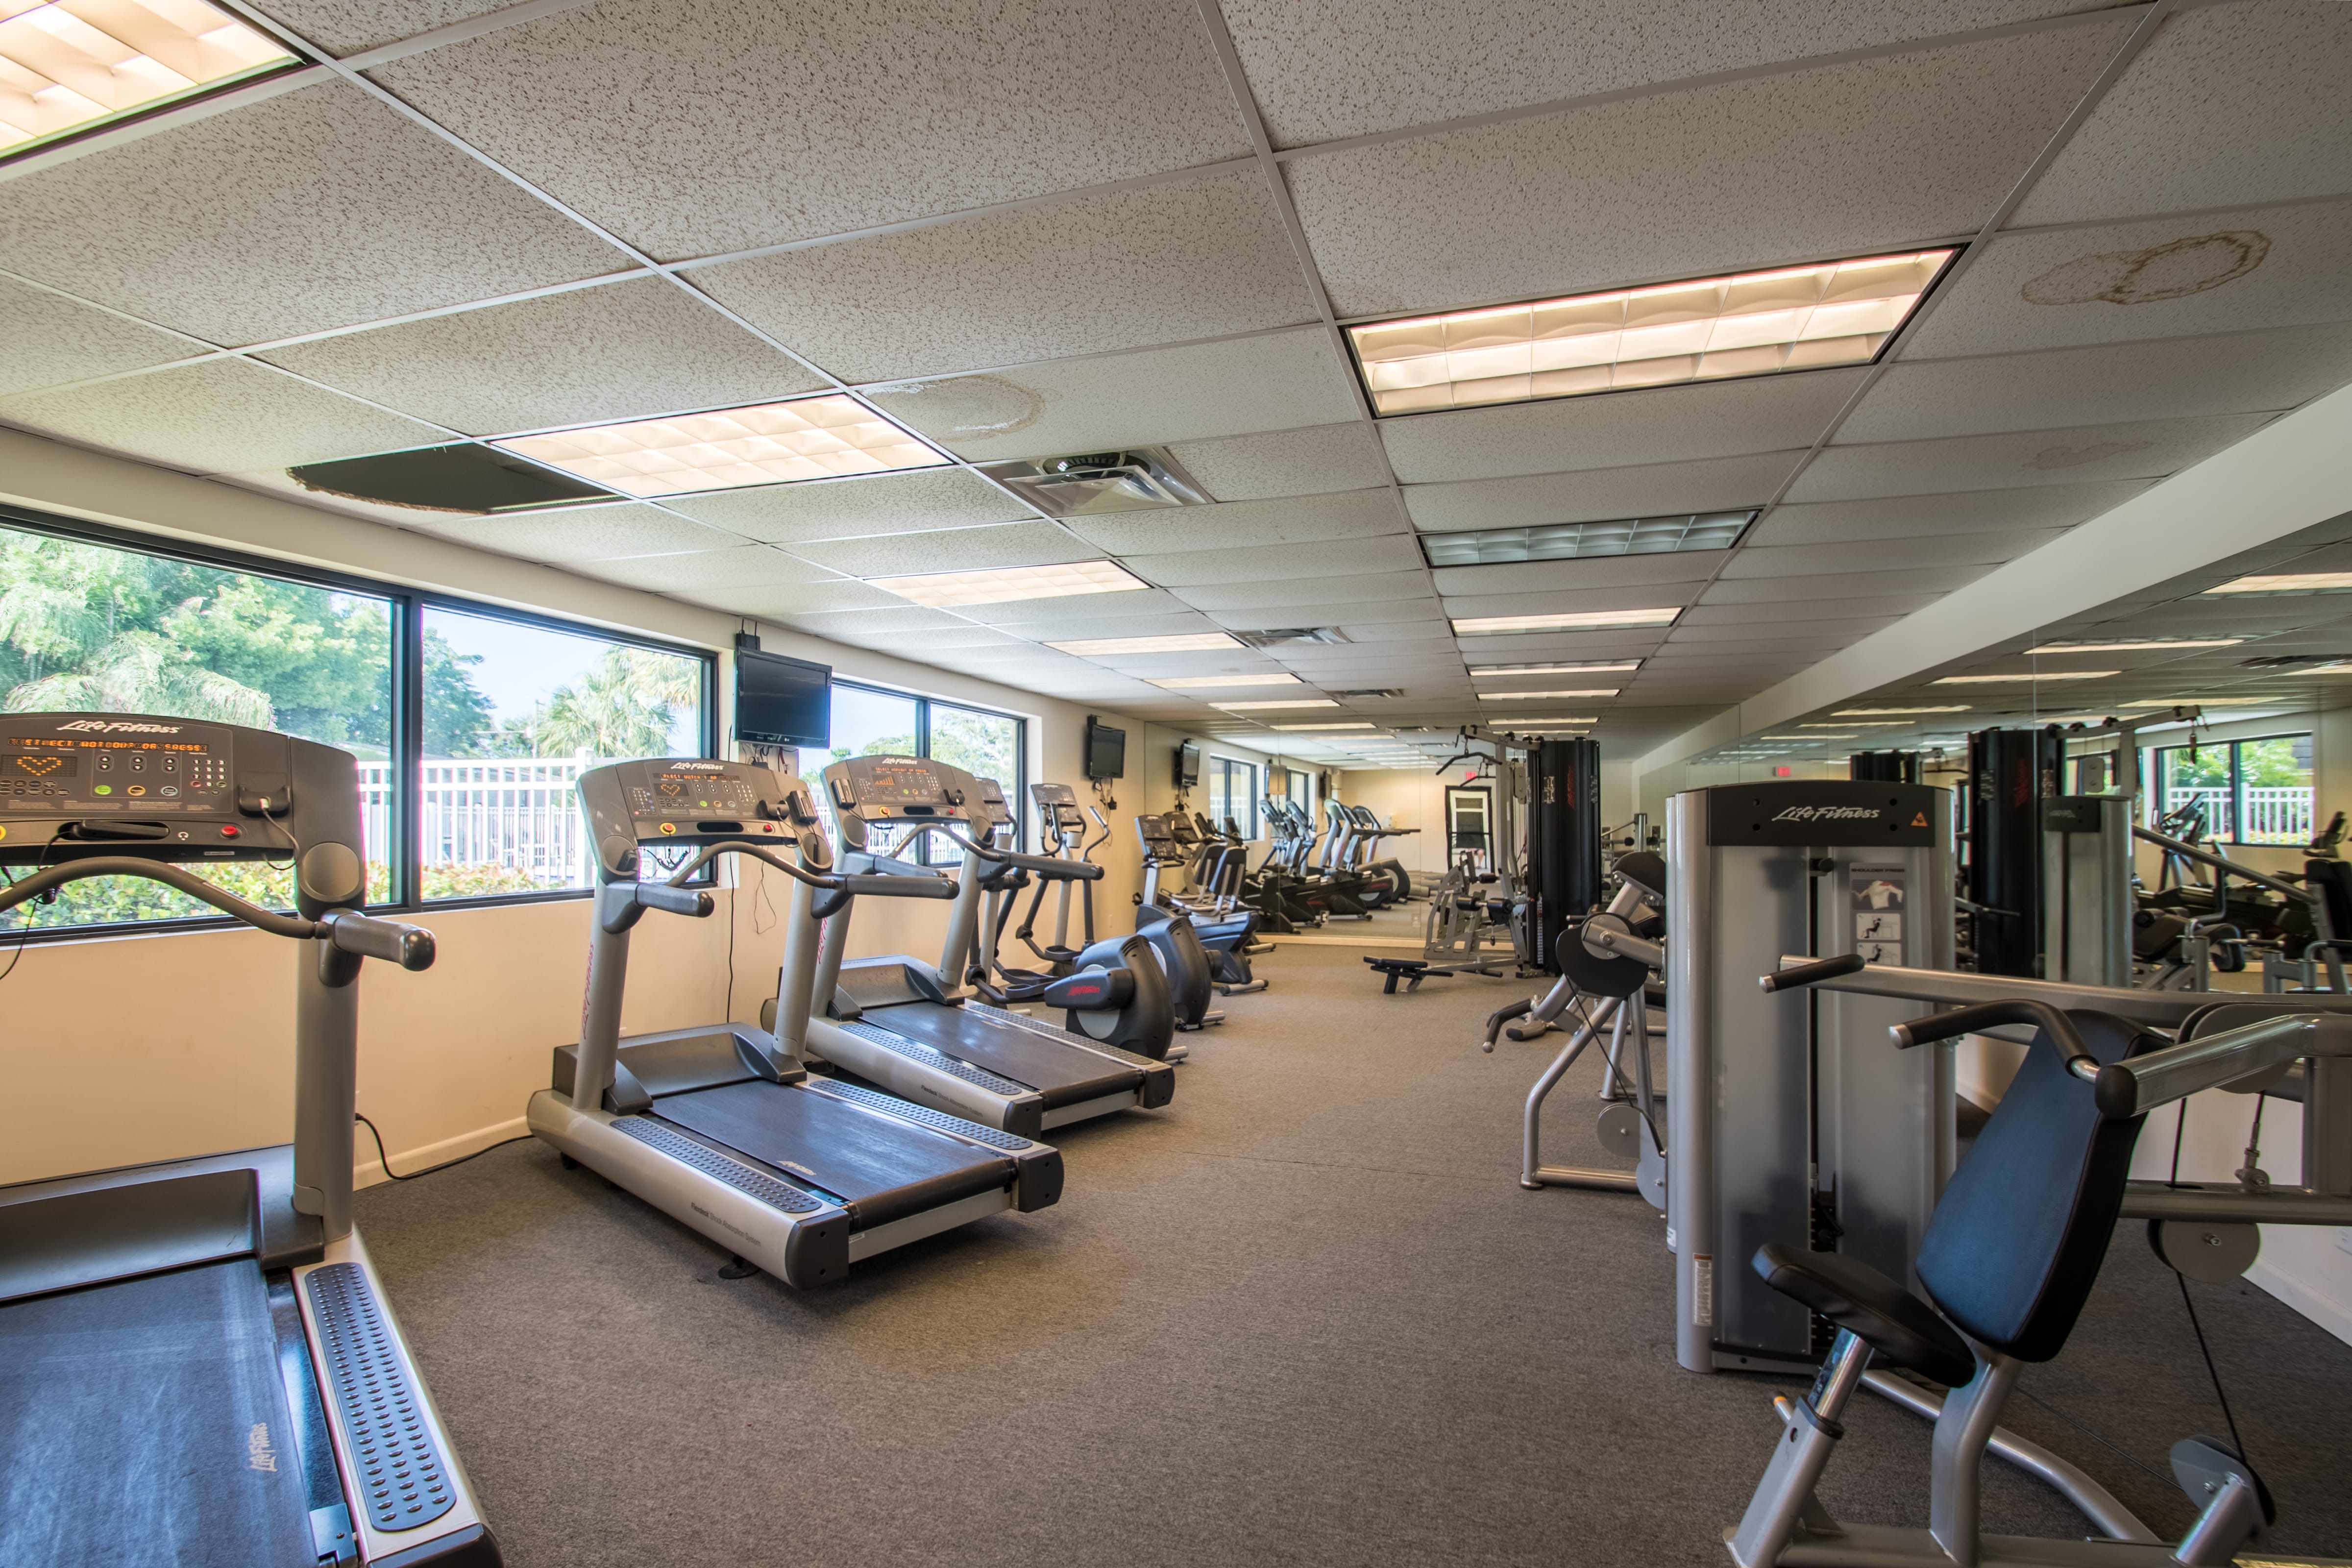 Fitness center has treadmills, stationary bikes and weight machines.